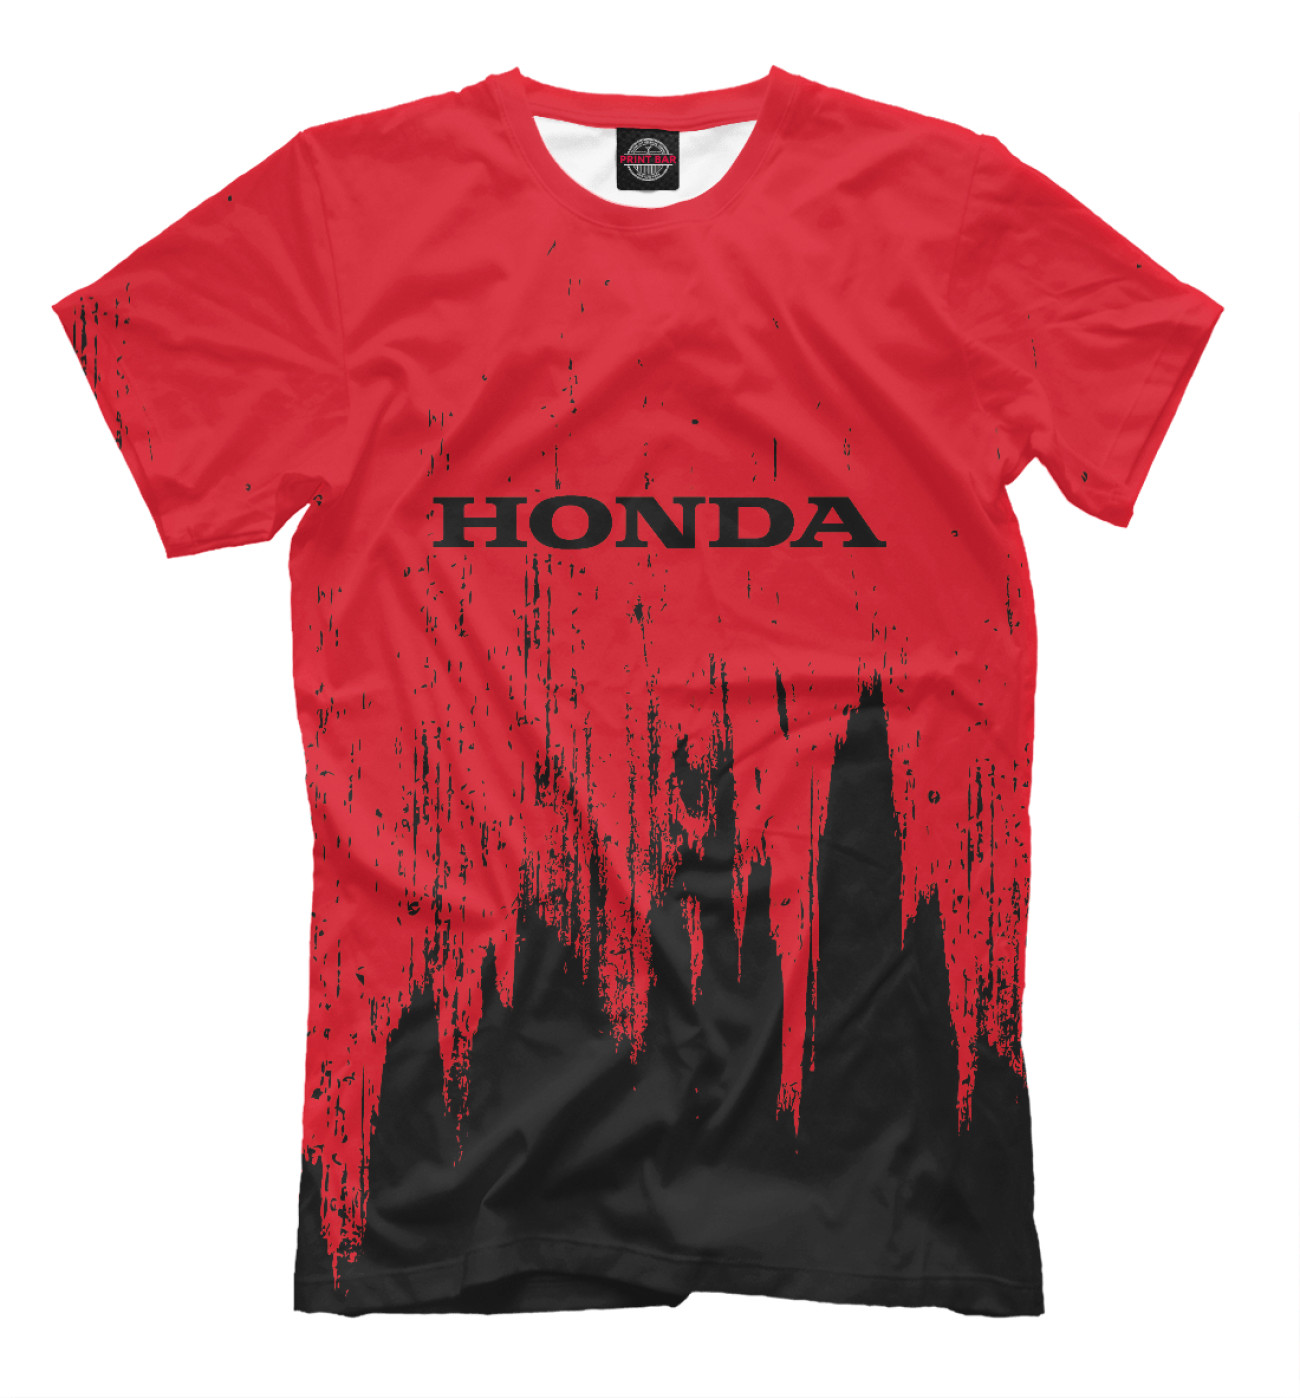 Мужская Футболка Honda / Хонда, артикул: HON-890455-fut-2